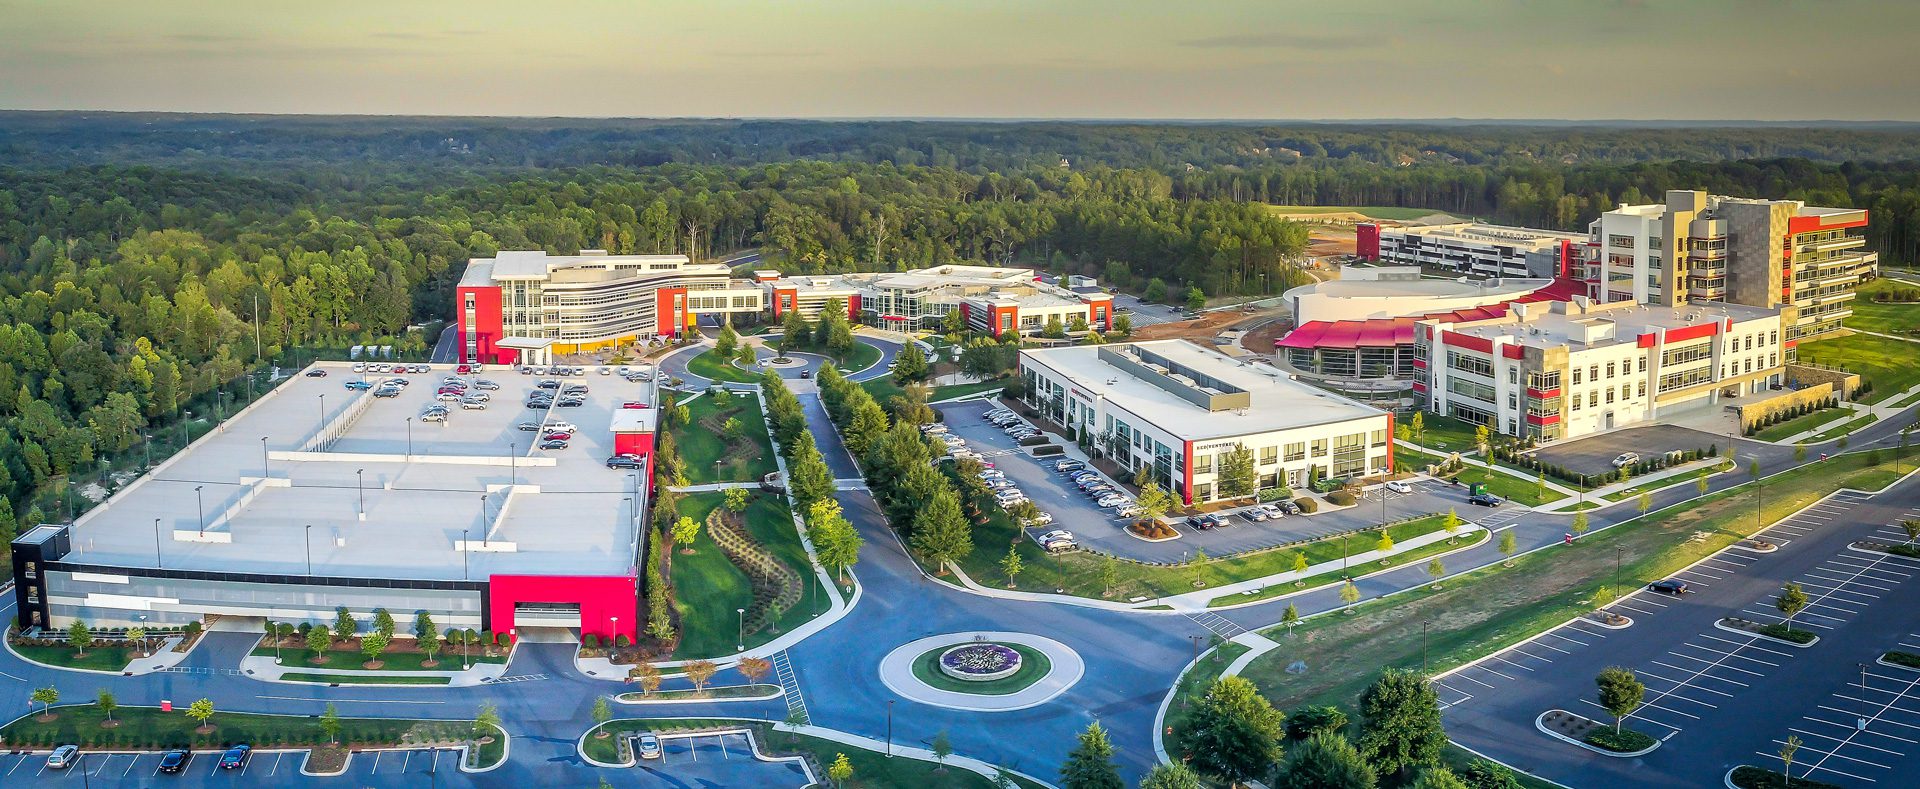 Red Ventures Headquarters at 521 Corporate Center aerial shot